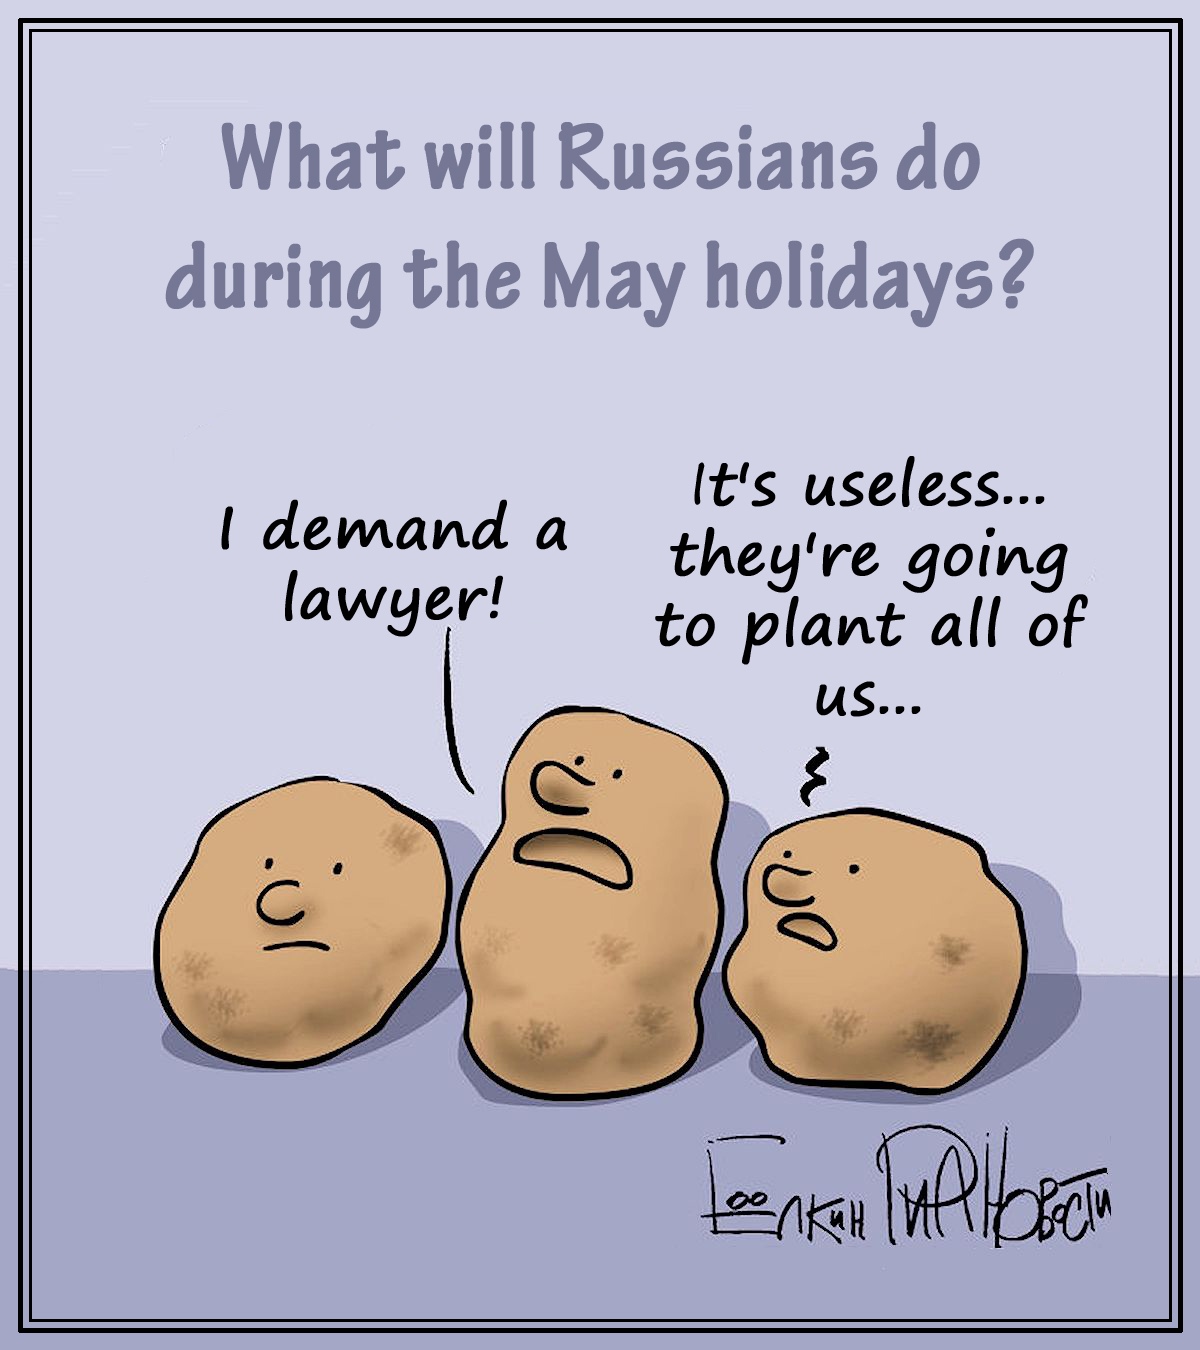 00 Sergei Yolkin. It’s May! To the Backyard! We Gotta Plant the Potatoes! 2013